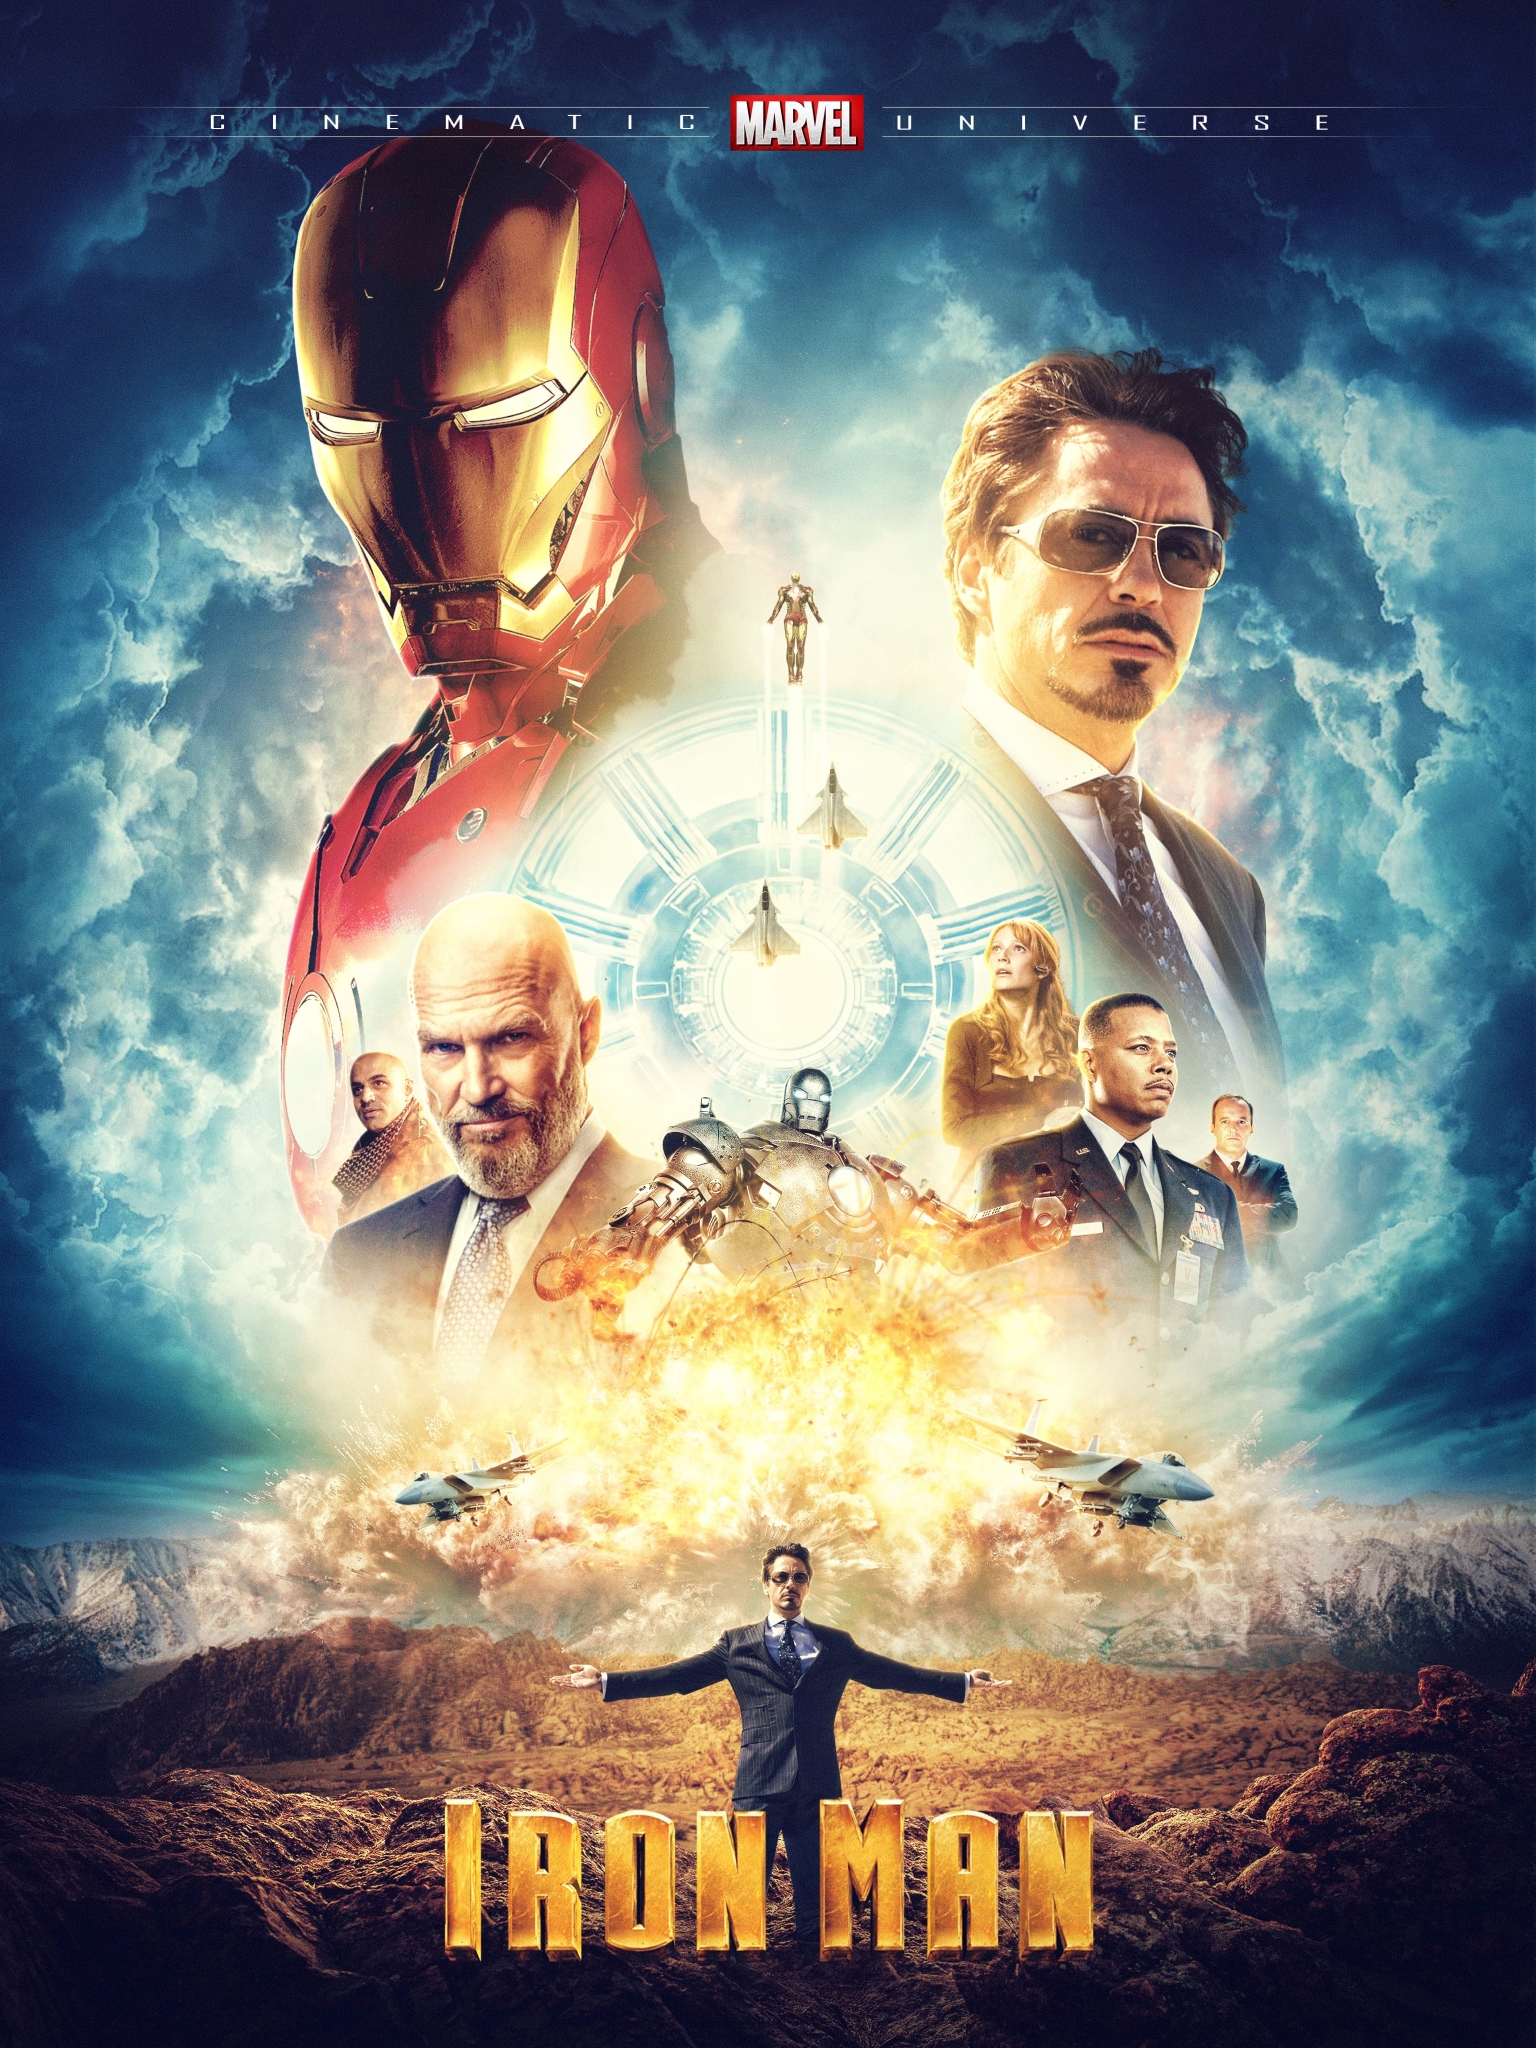 Tipo delantero seguro entonces Ramón on Twitter: "Iron Man (2008 film) #fanart #ntetreaultabel #poster  https://t.co/y0OMAQeuQP" / Twitter